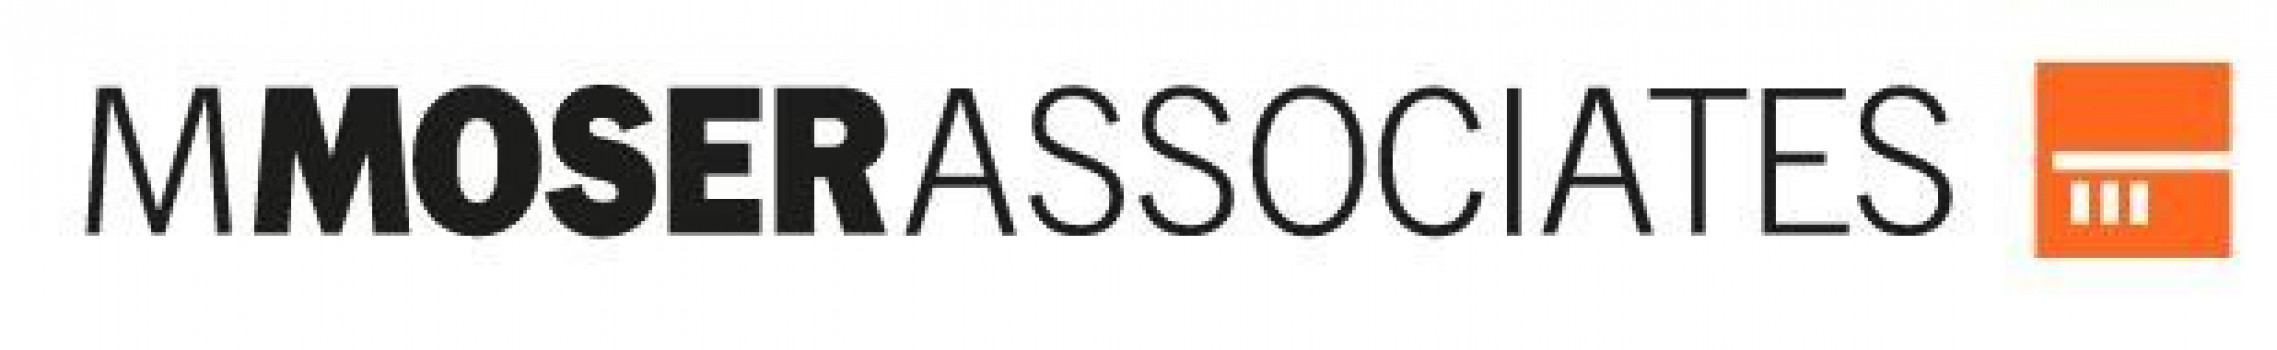 Kast Associates Ltd